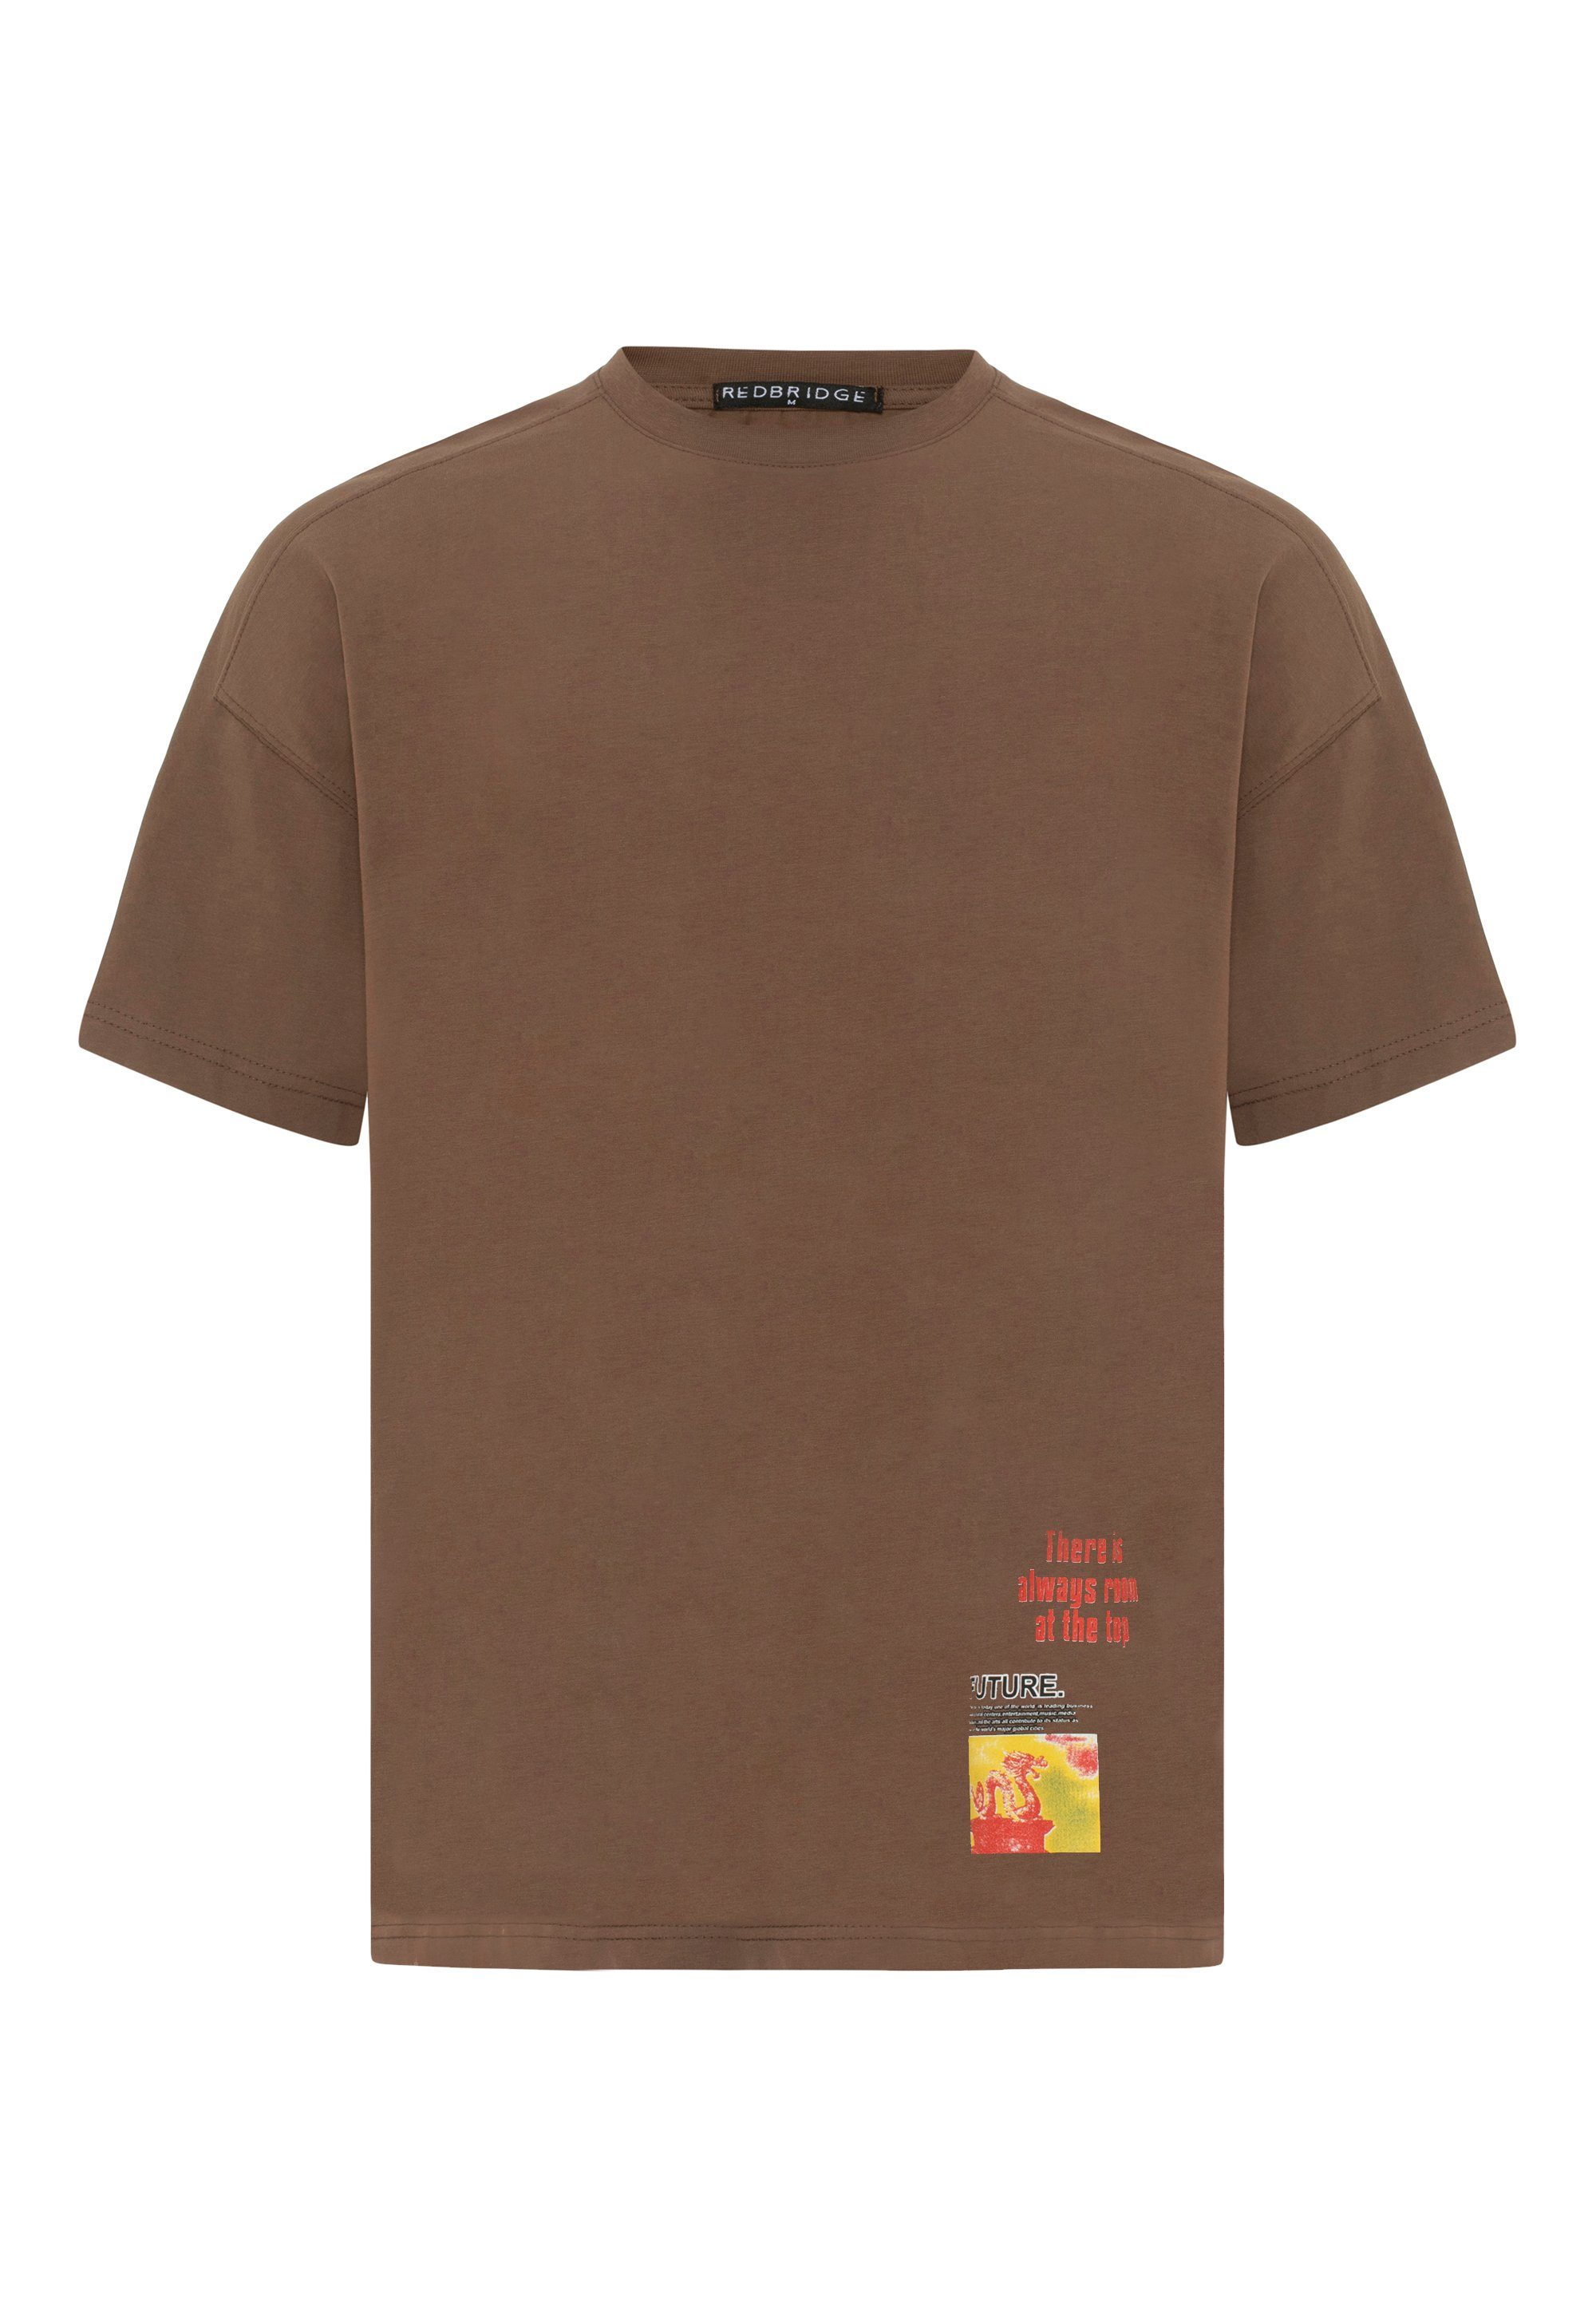 Rückenprint braun großem Halesowen T-Shirt RedBridge mit